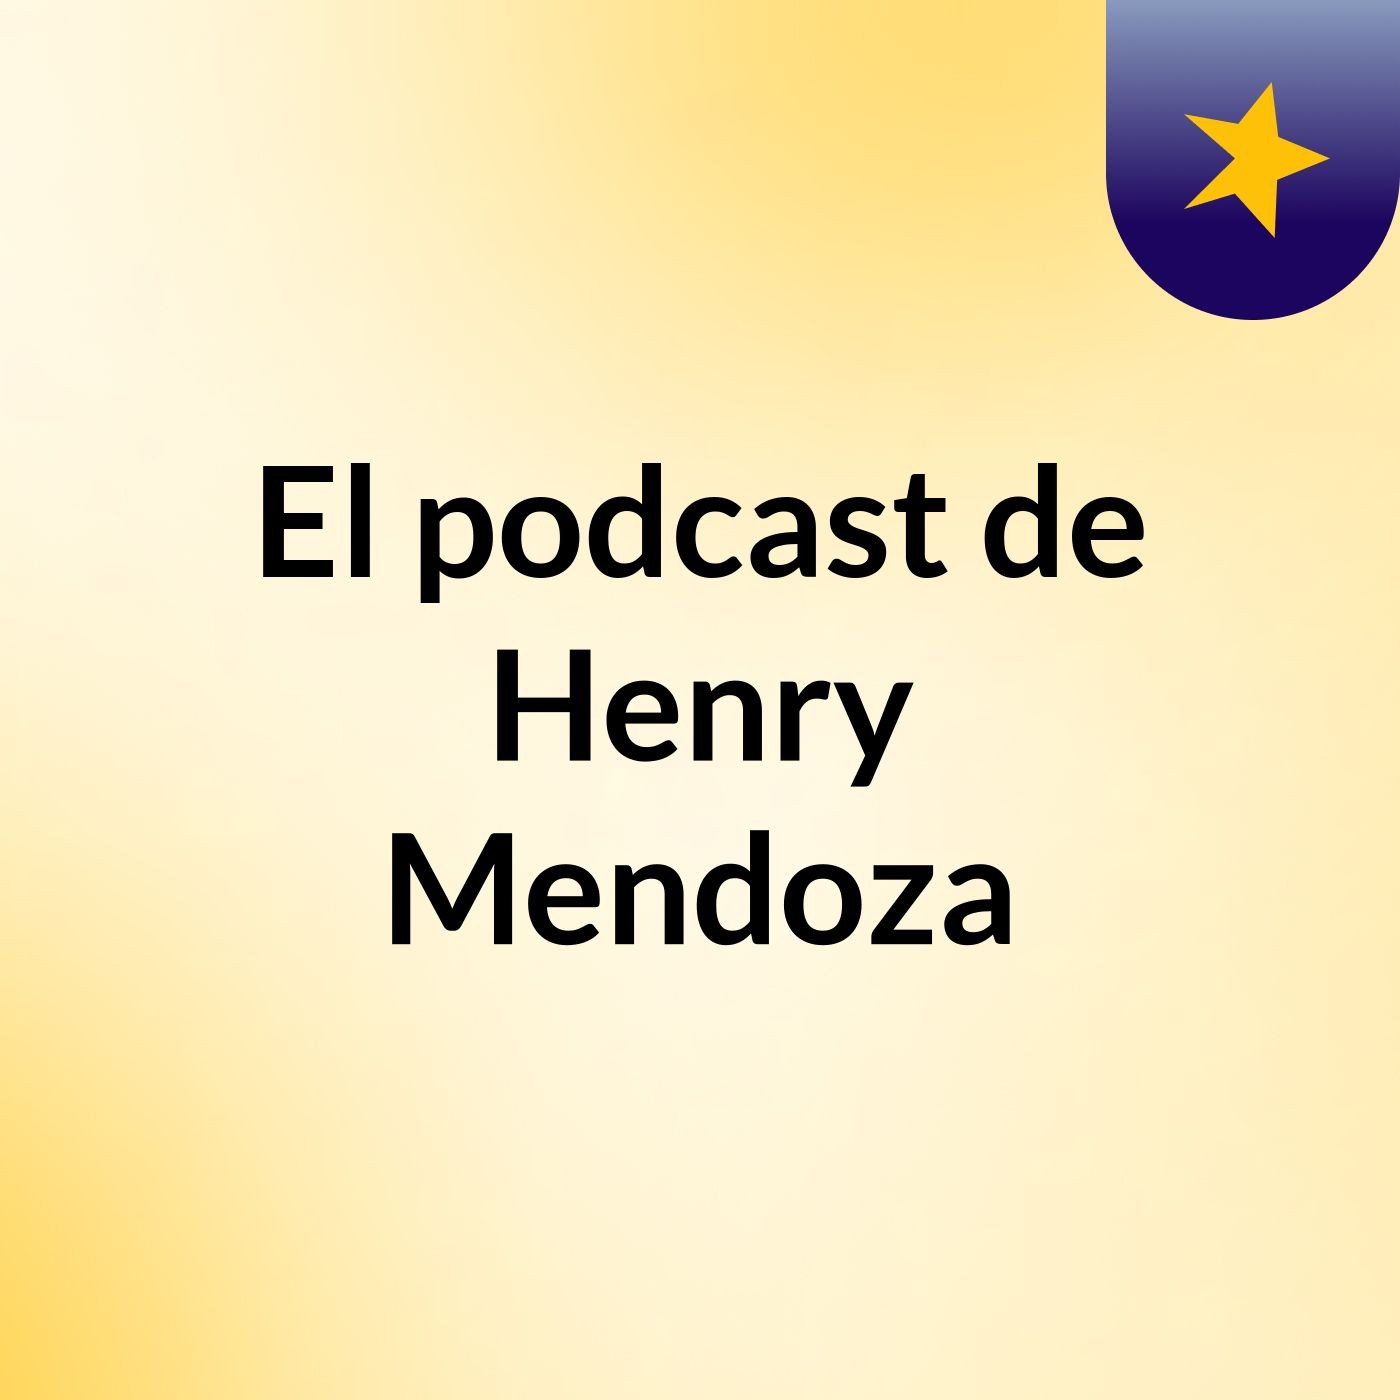 El podcast de Henry Mendoza